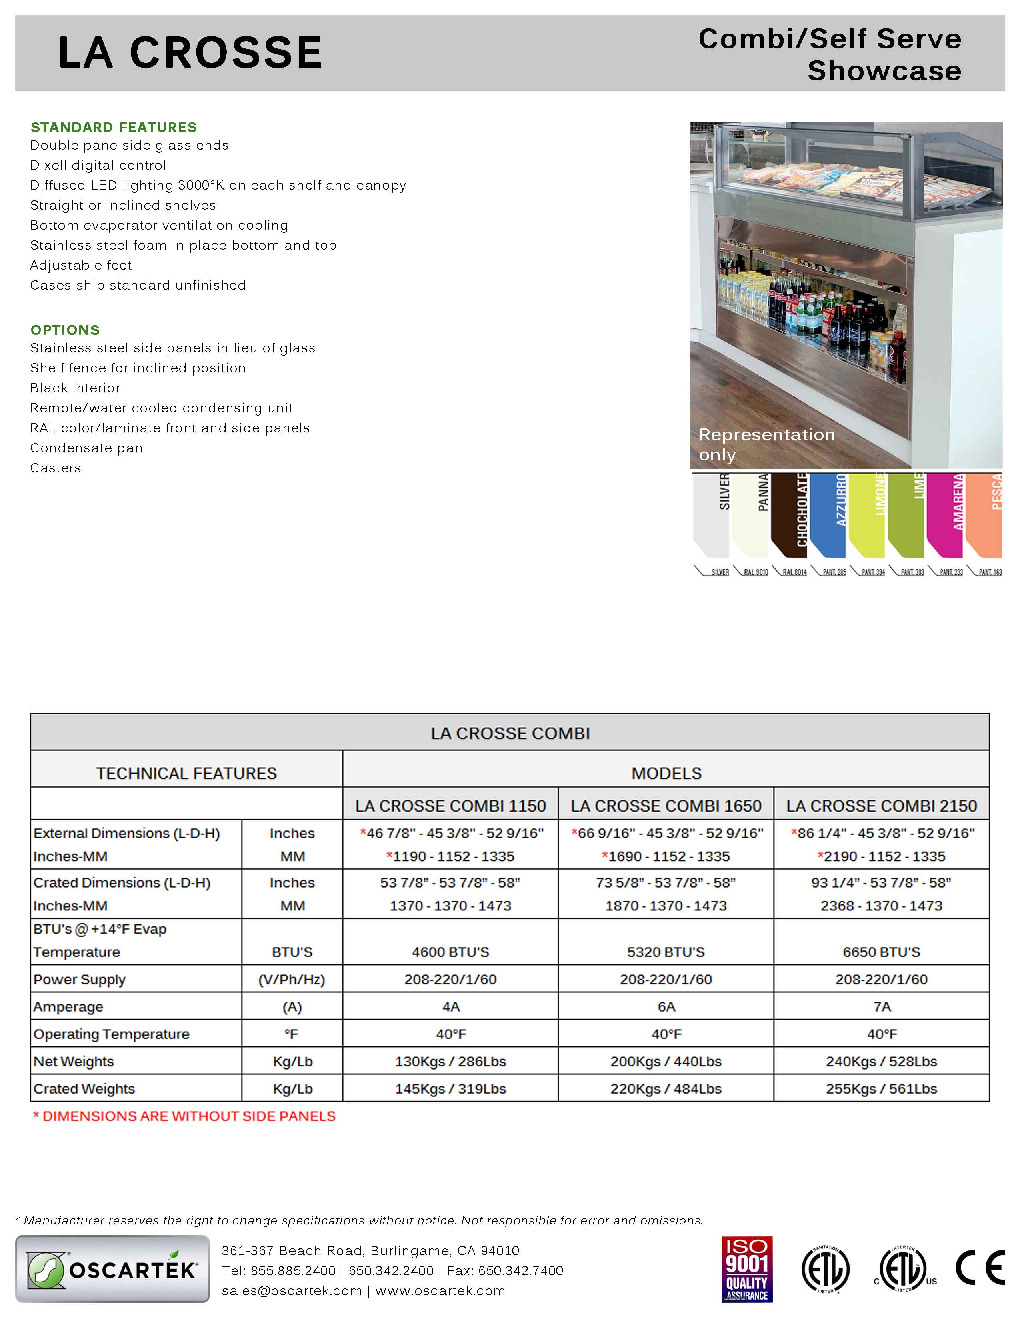 Oscartek LA CROSSE COMBI 2150 Refrigerated Deli Display Case